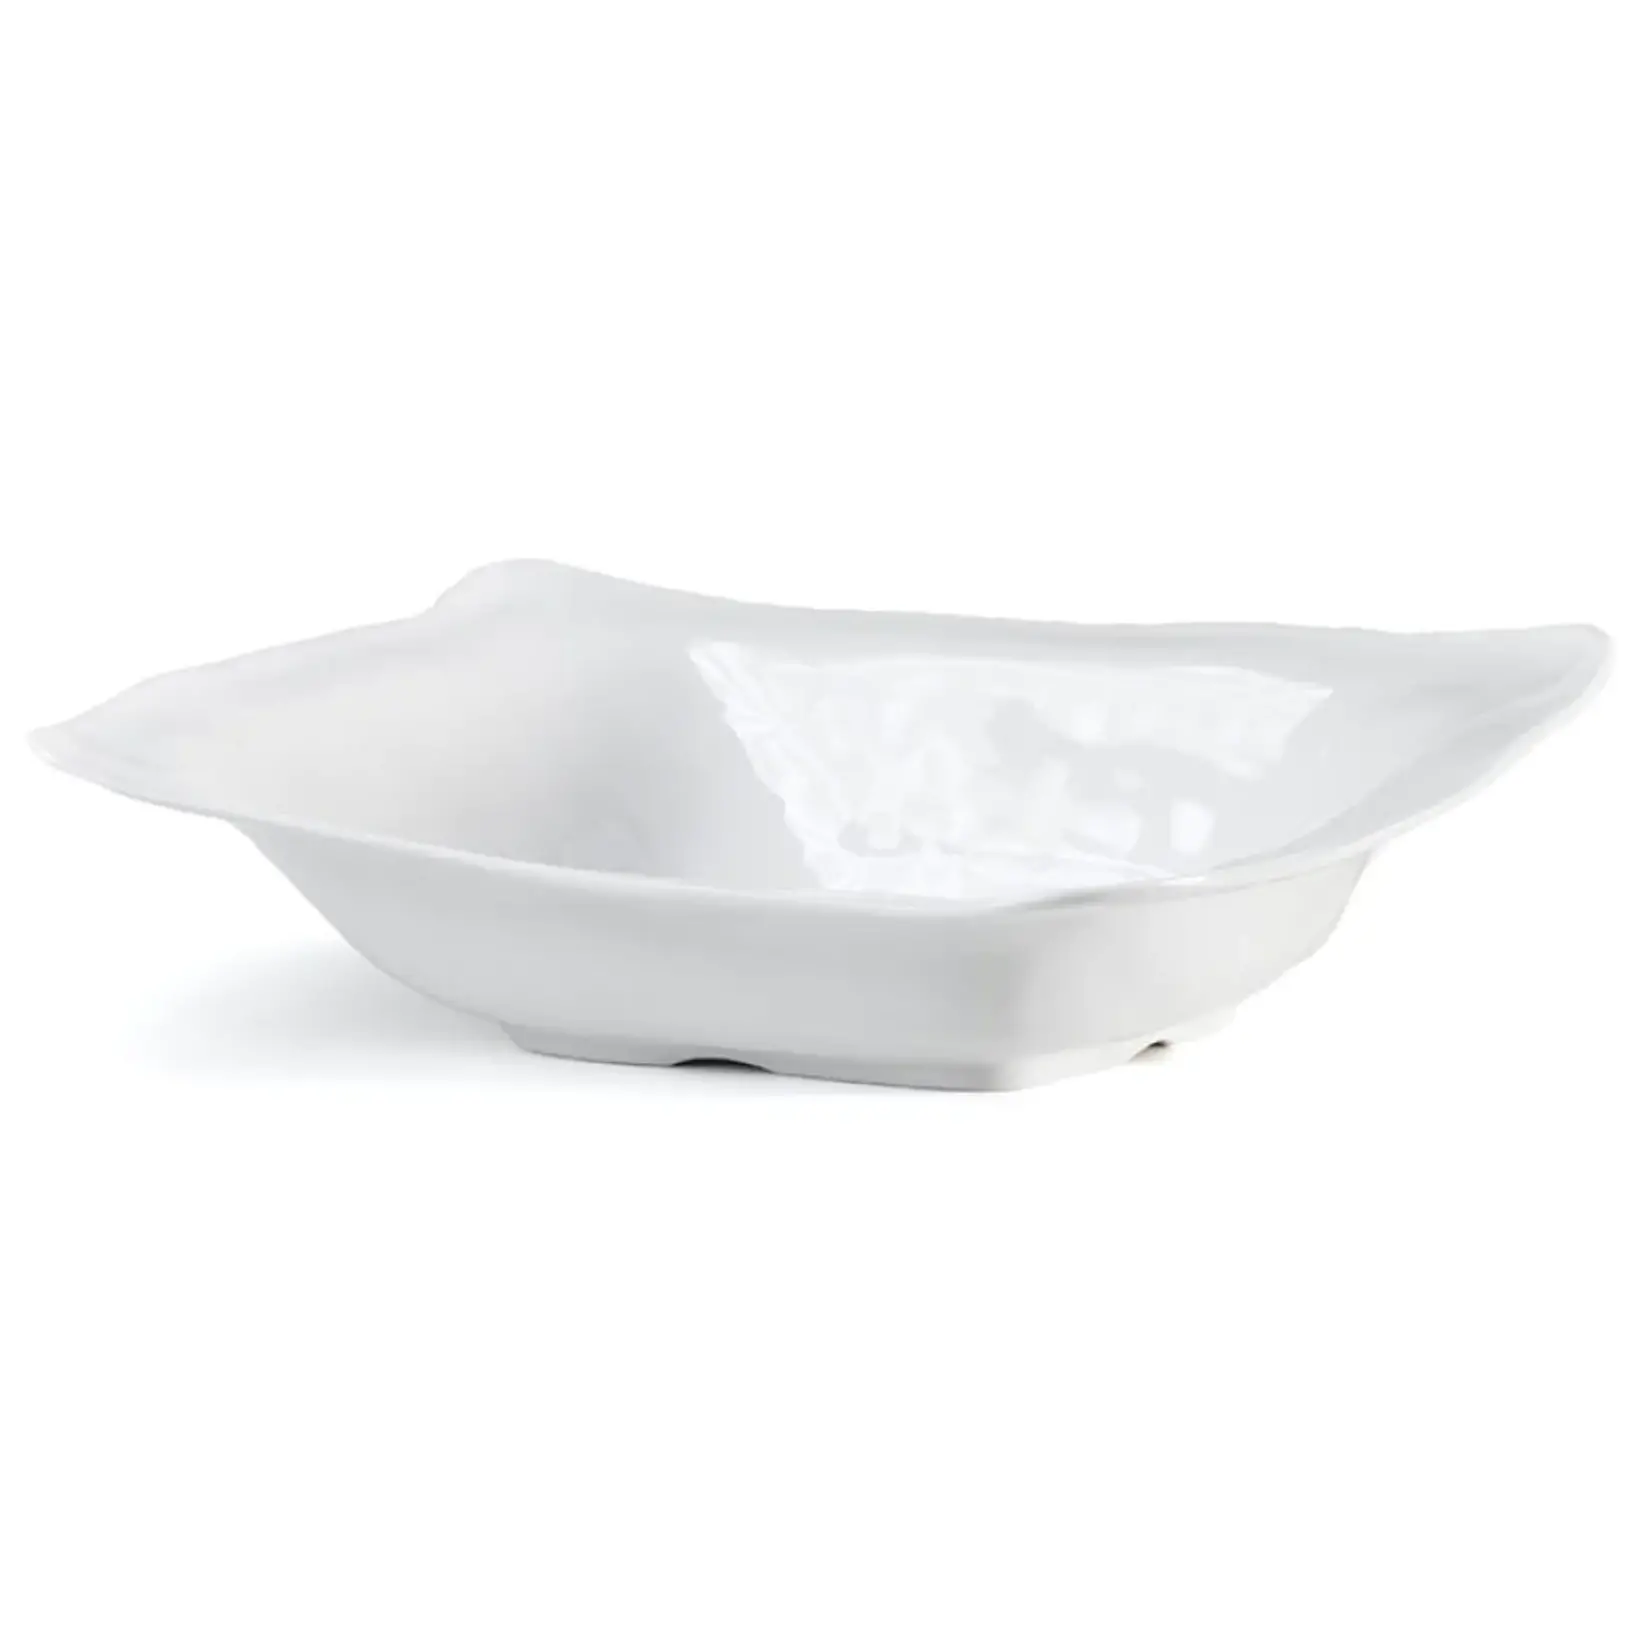 Q Squared Ruffle White Melamine Rectangle Shallow Serving Bowl